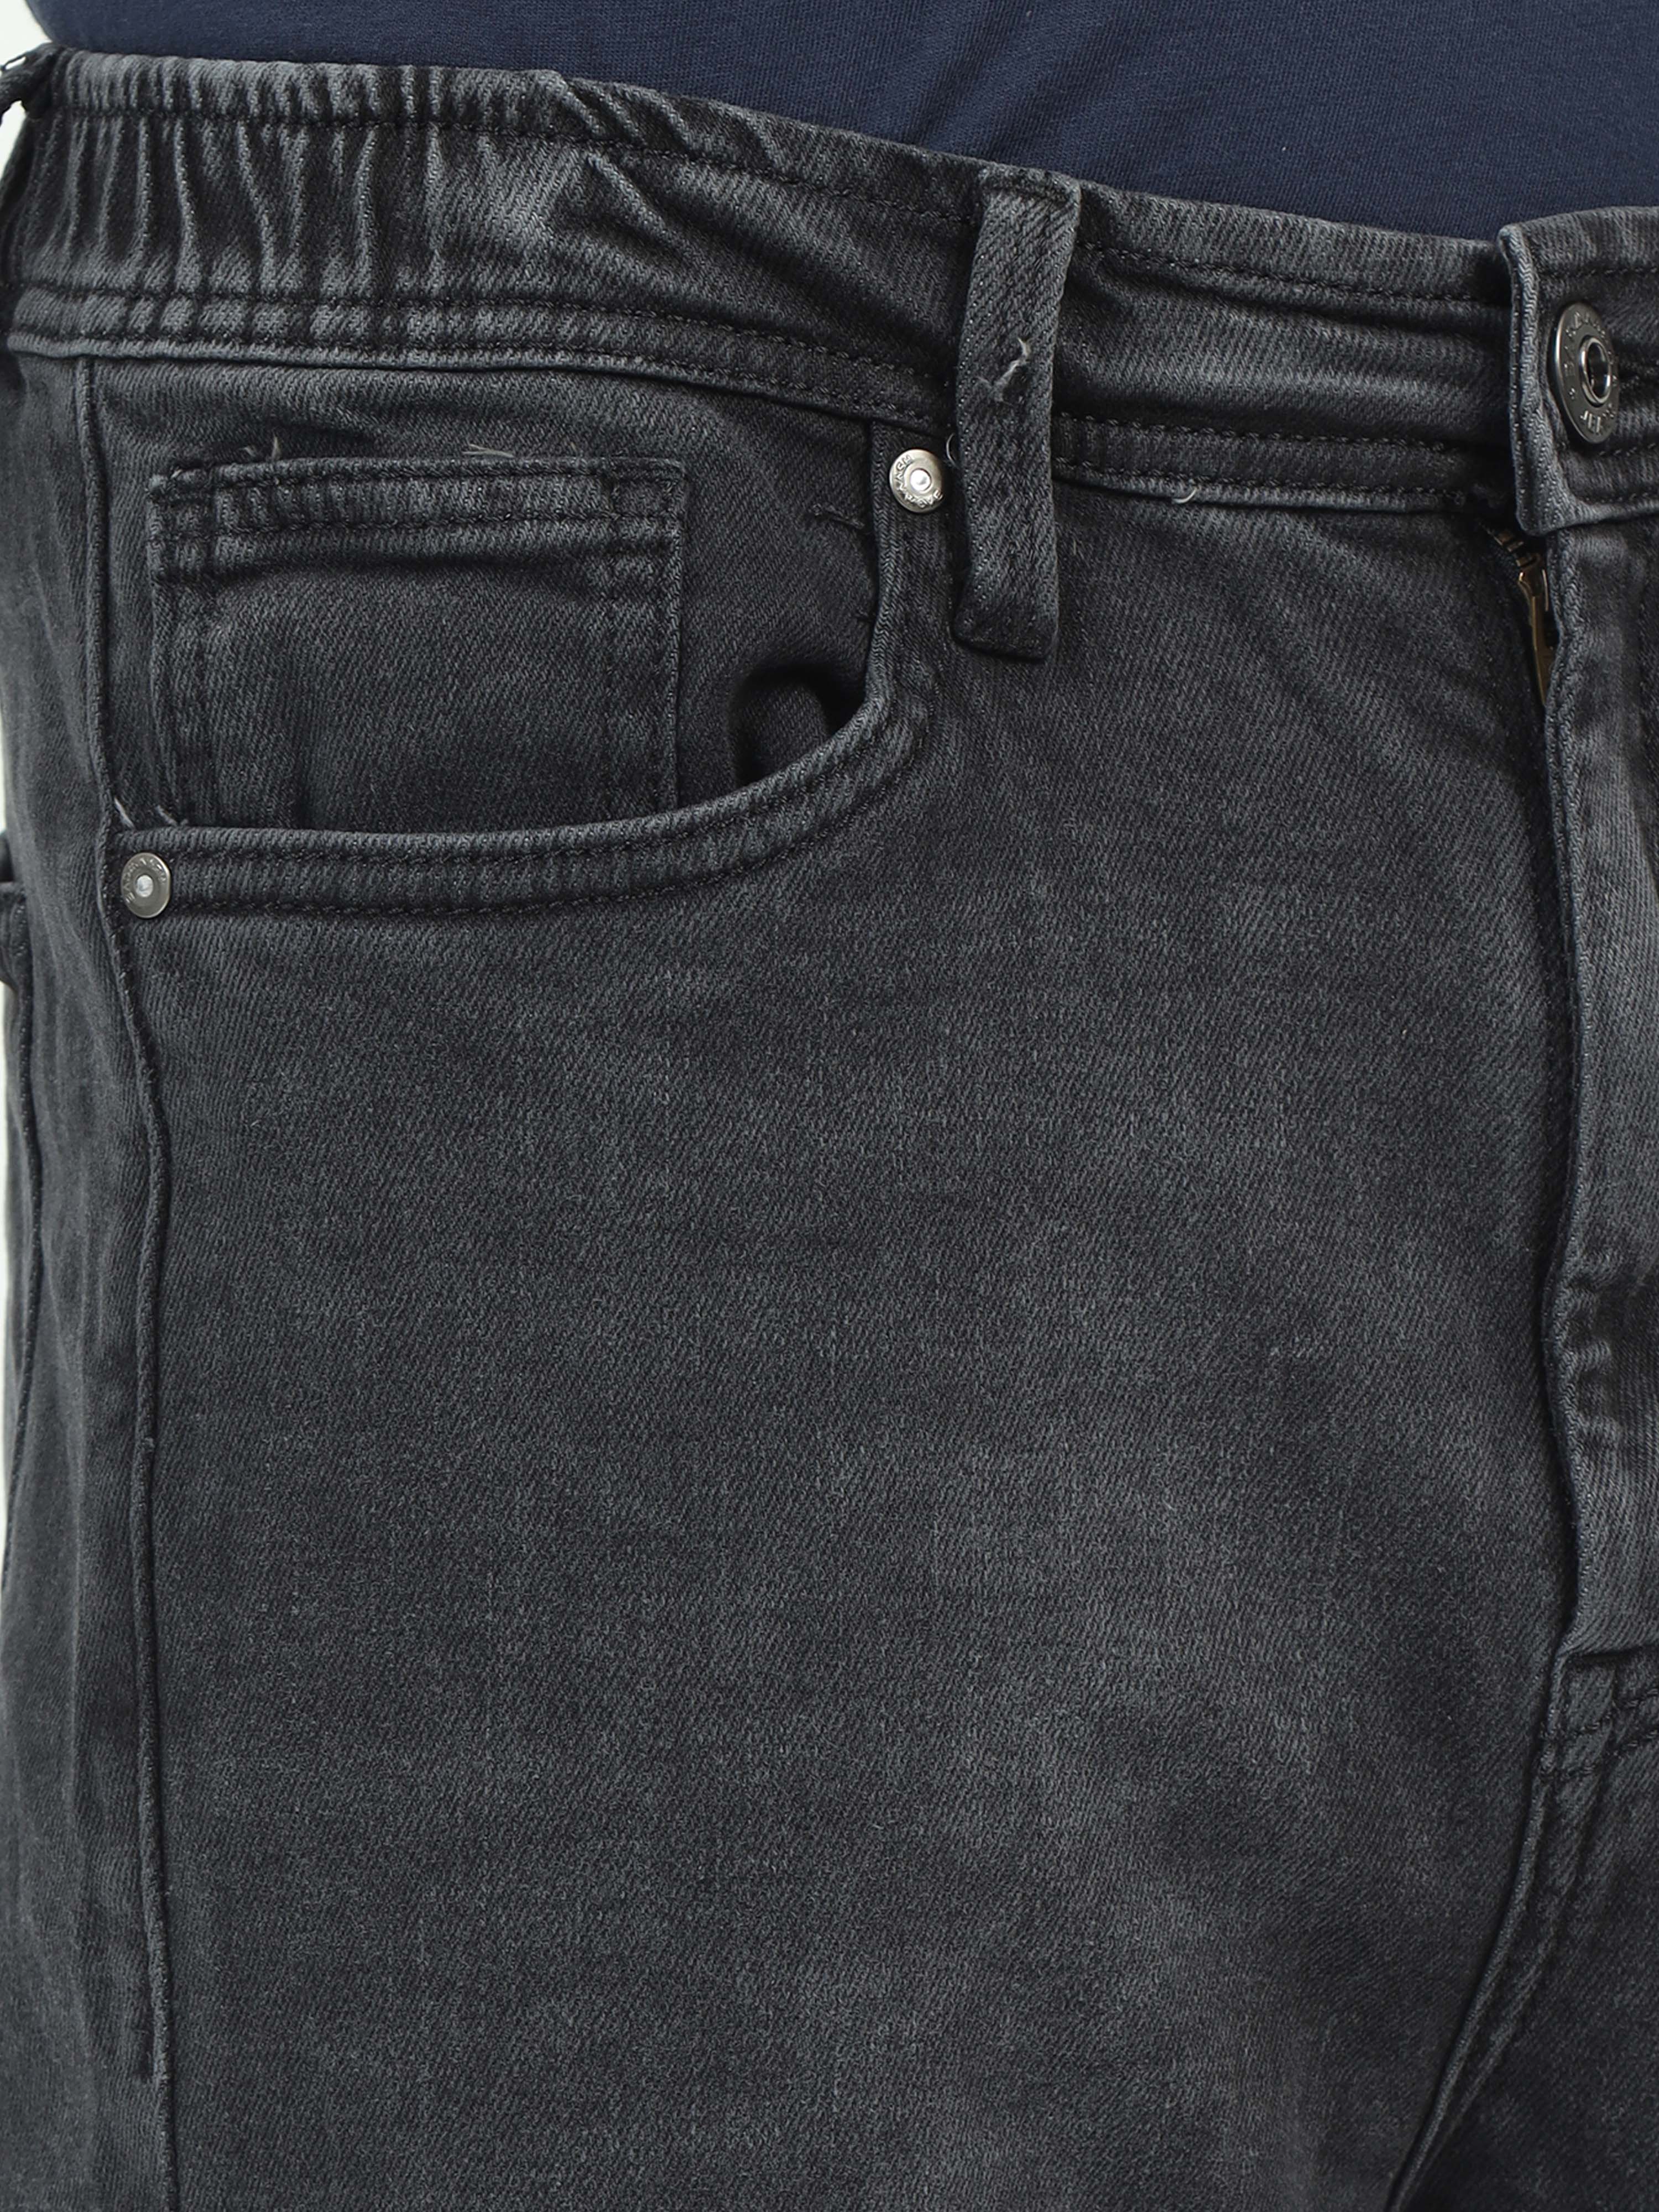 Dark Grey Slouchy Fit Jeans